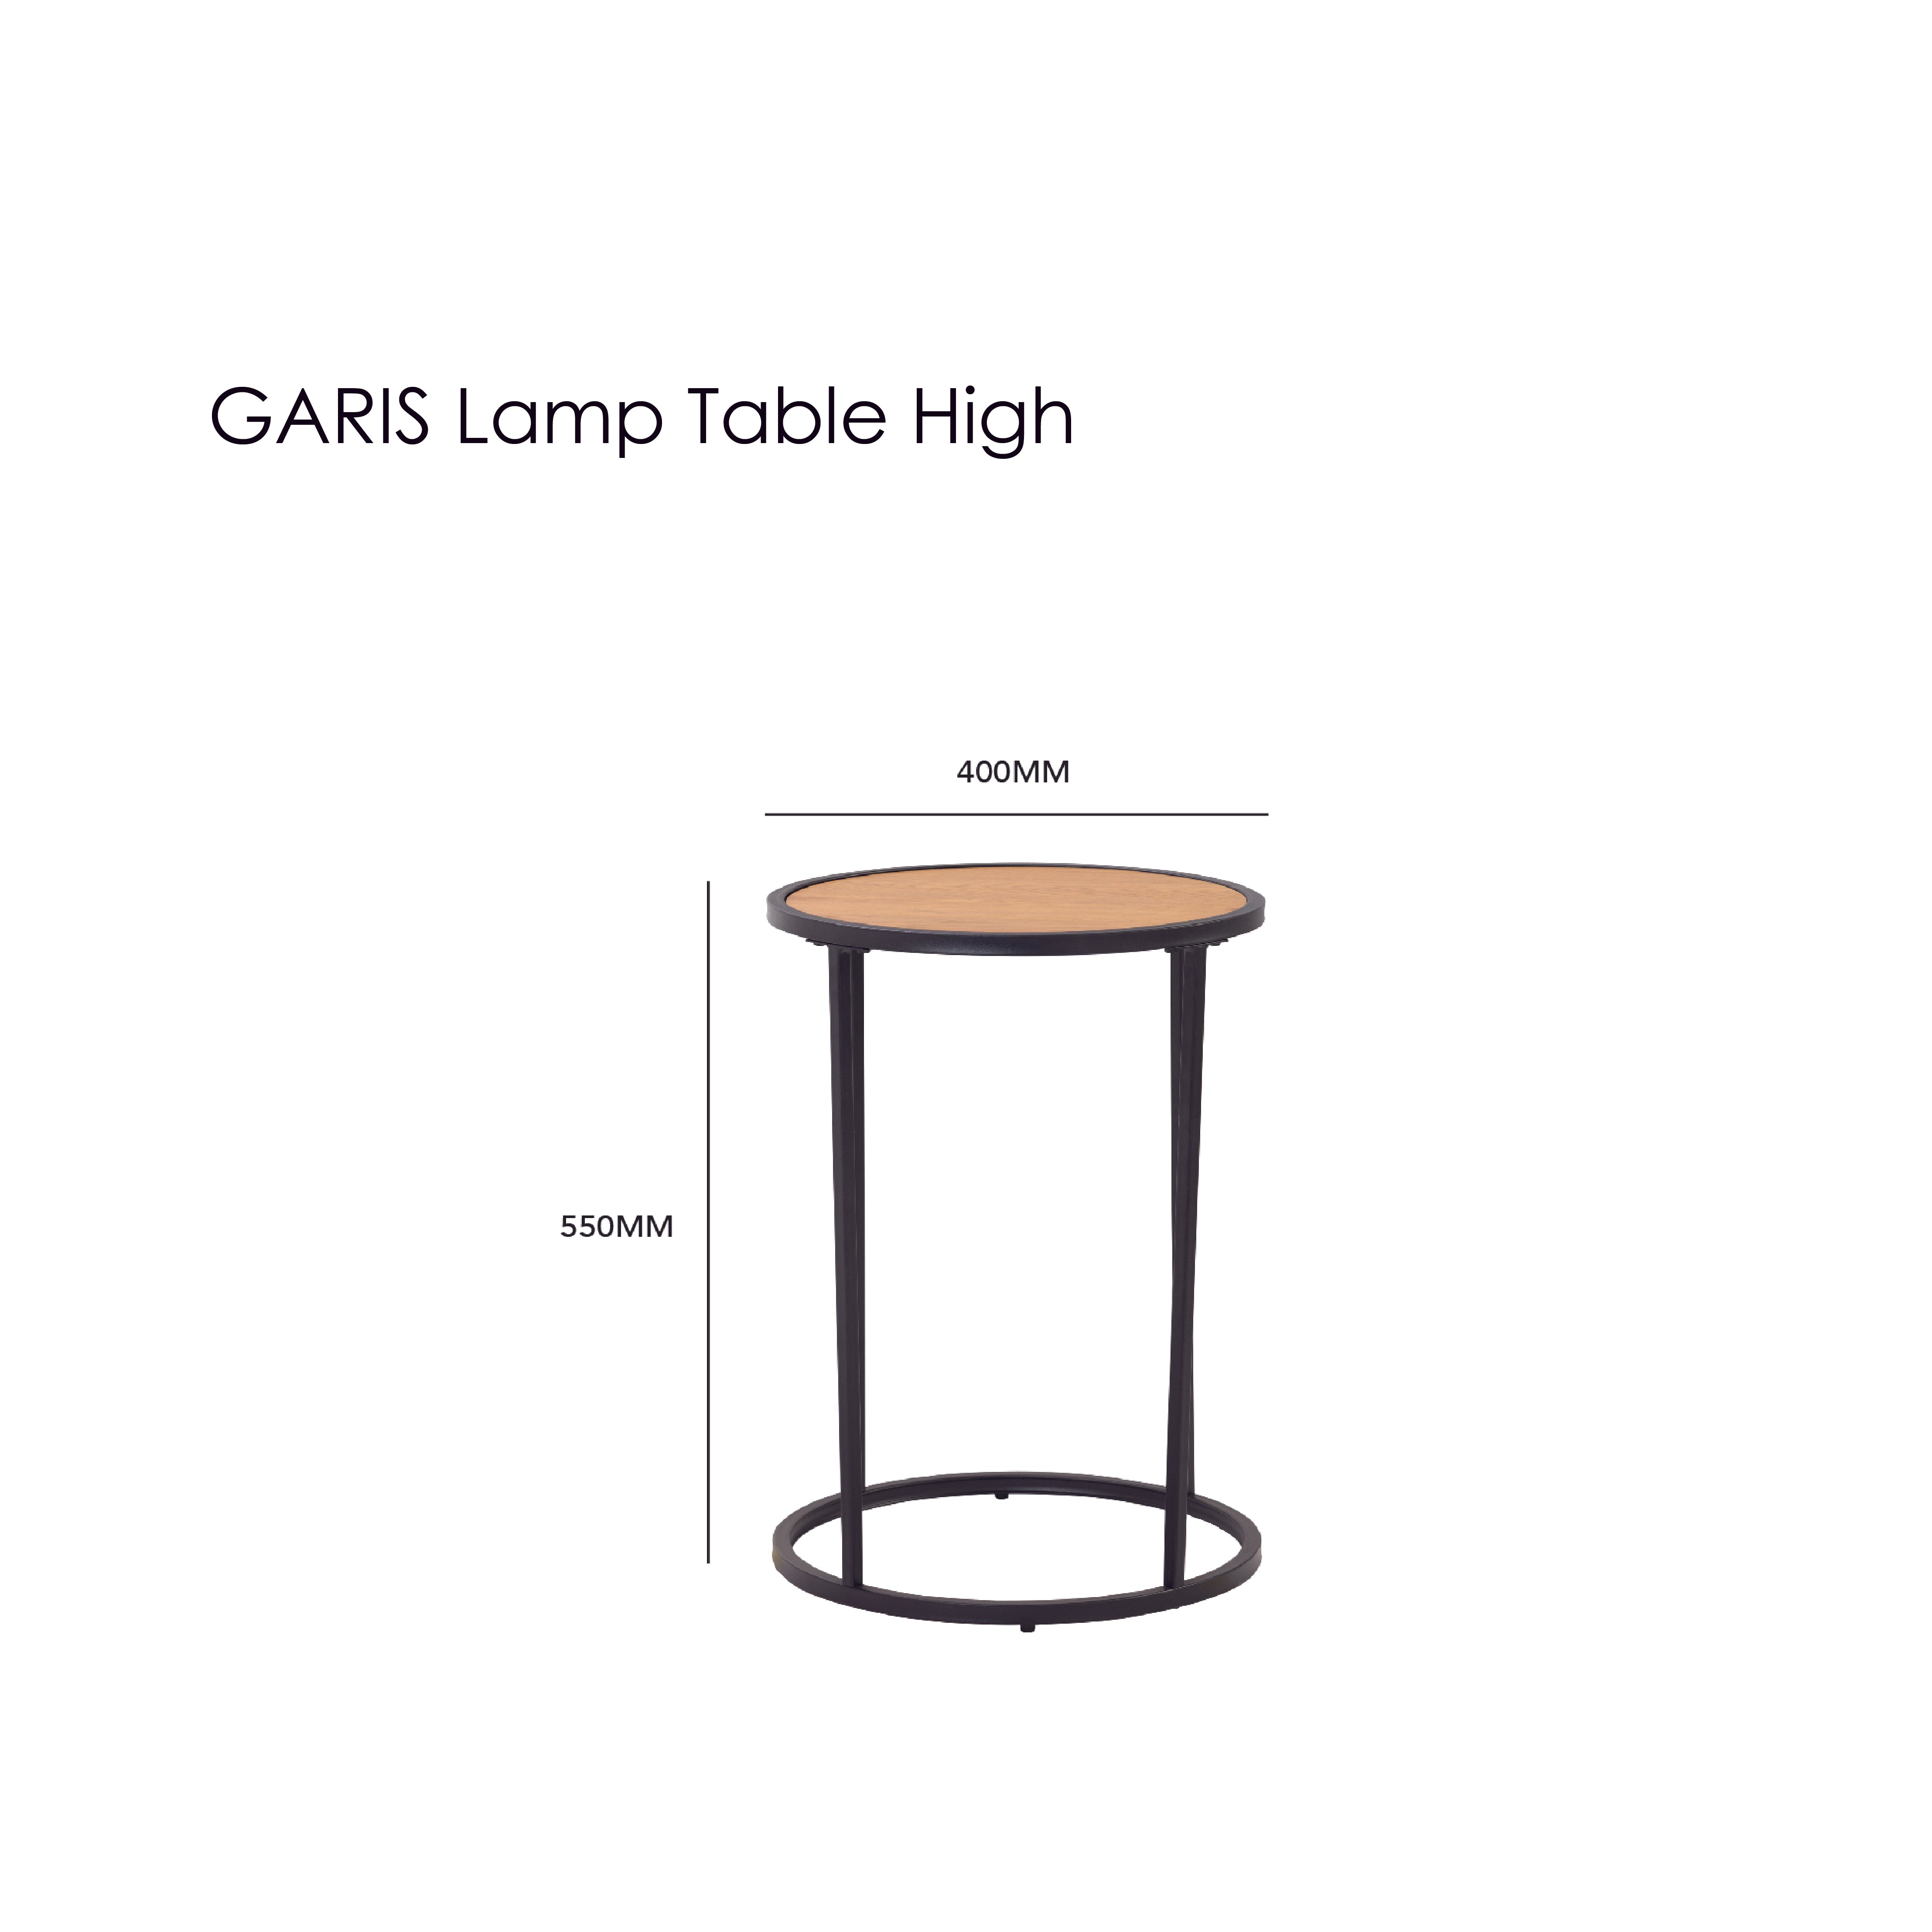 GARIS Lamp Table High